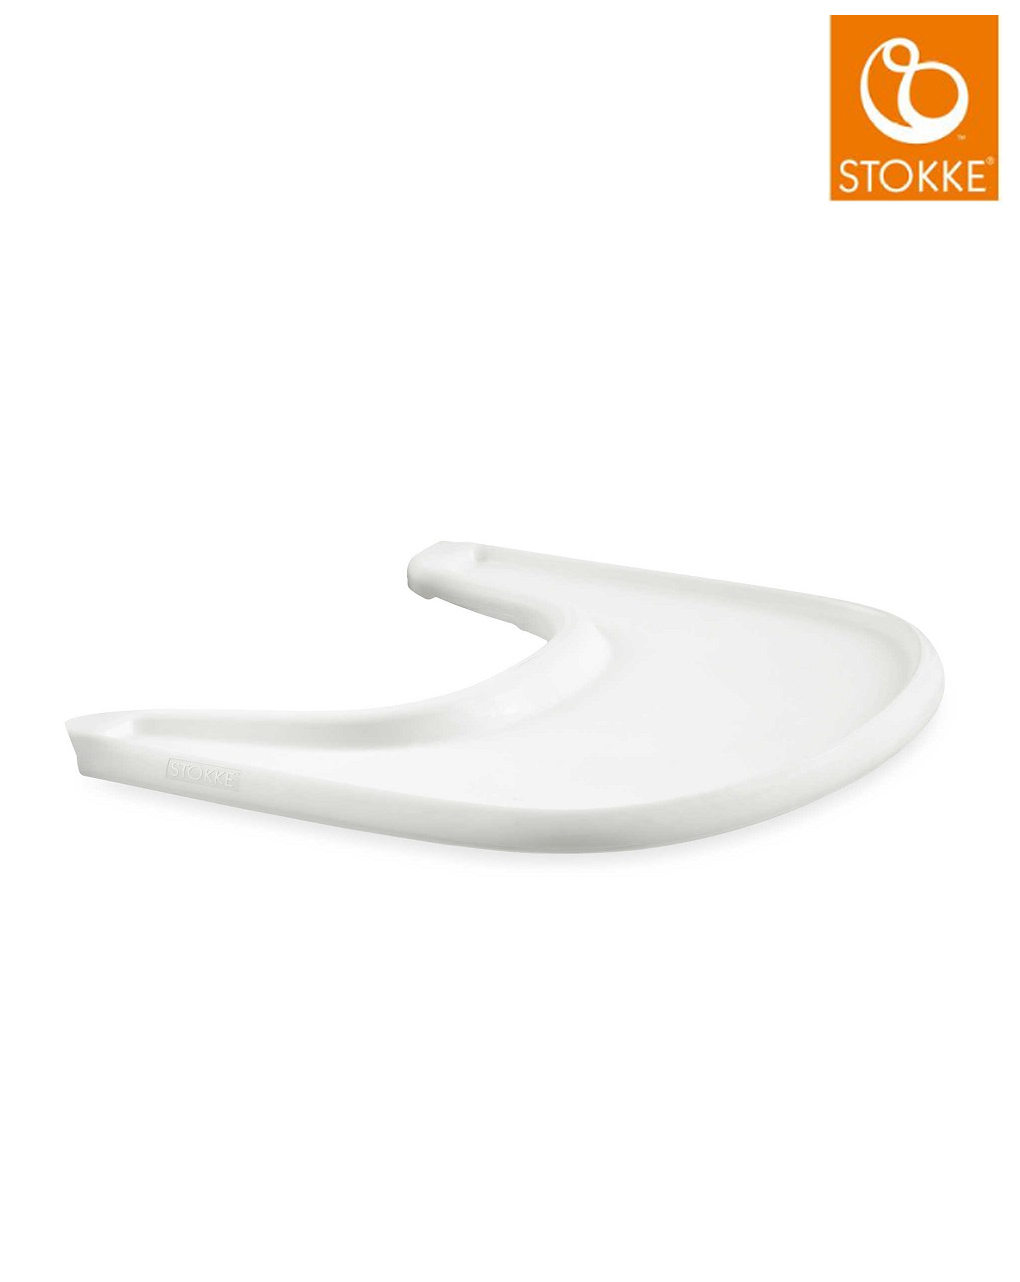 Stokke® tray – white